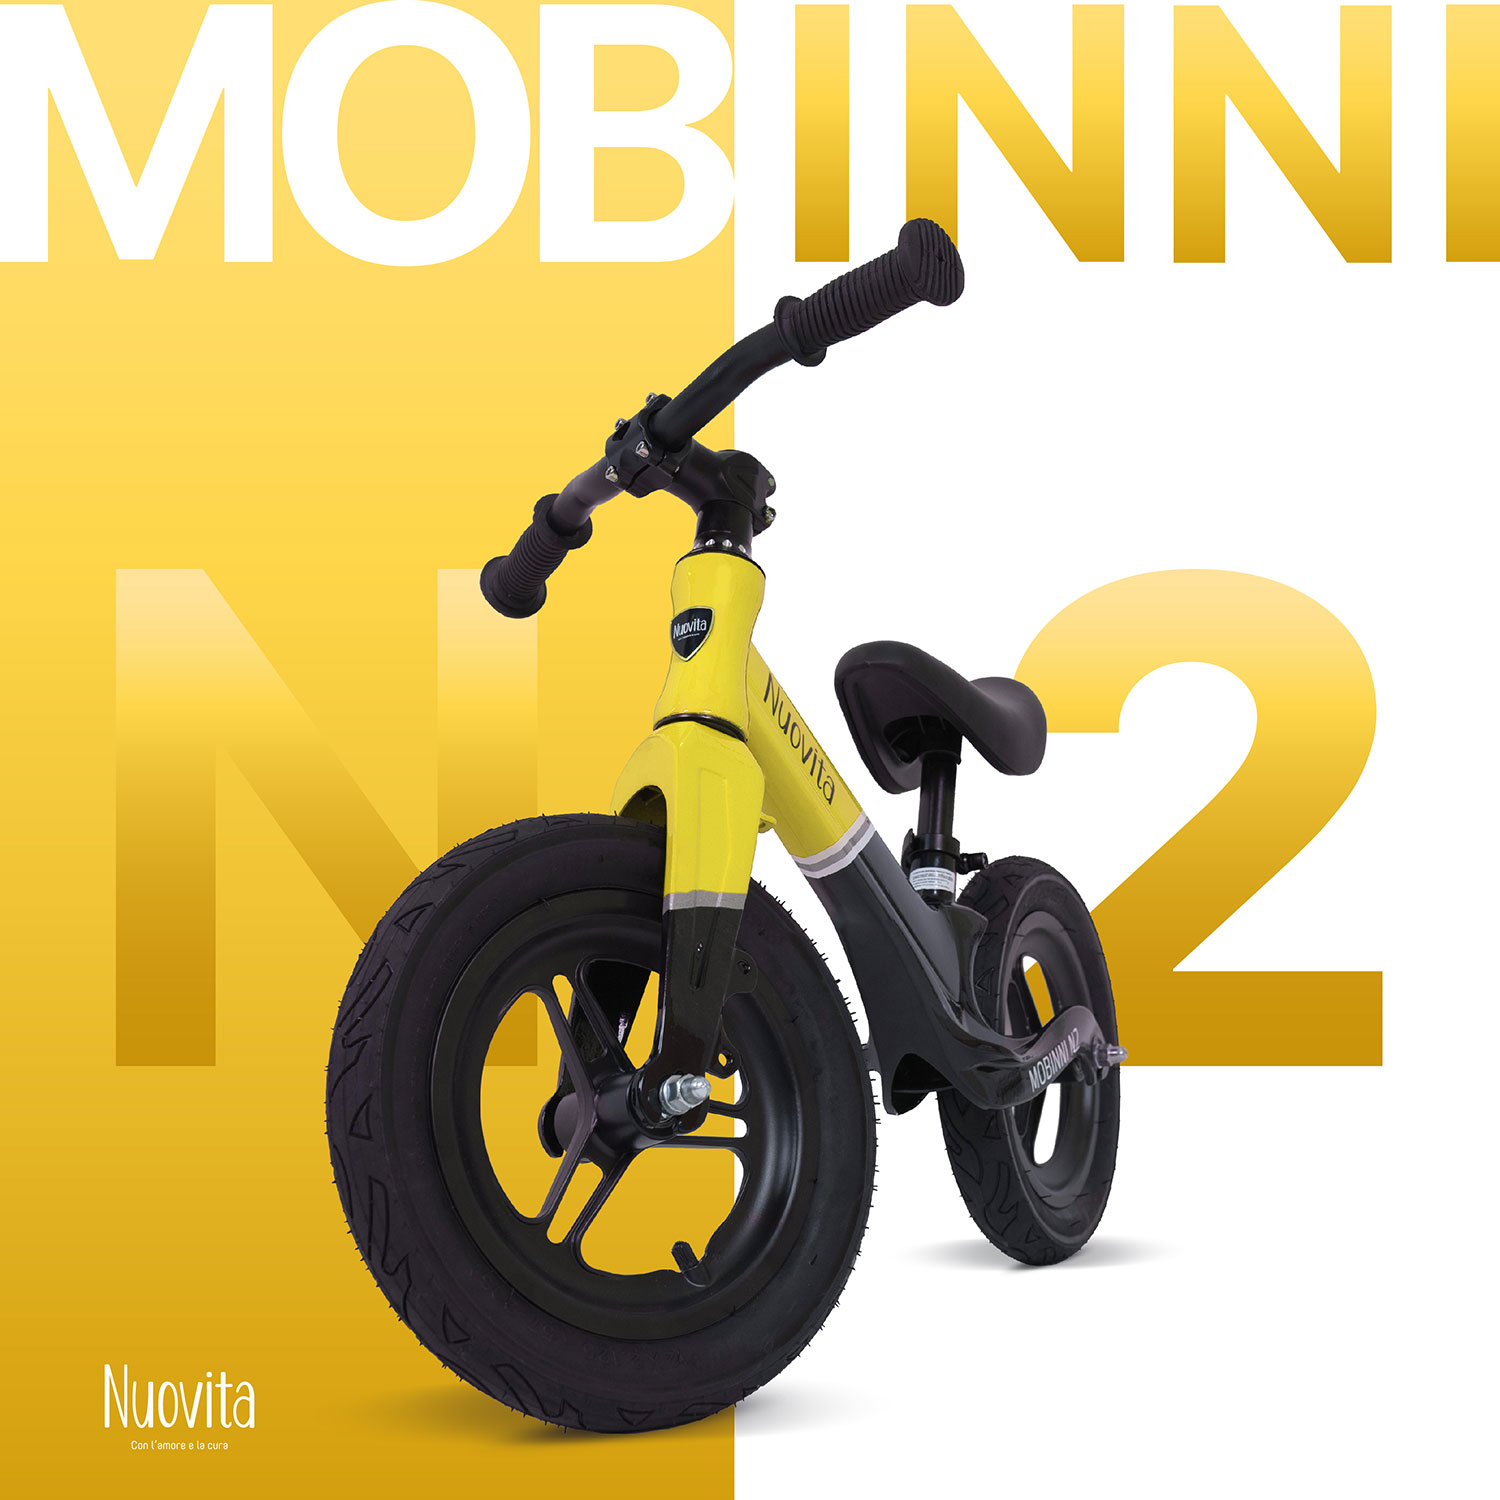 Беговел Nuovita Mobinni N2 (Nero Giallo/Желто-черный) беговел nuovita mobinni n2 nero giallo желто